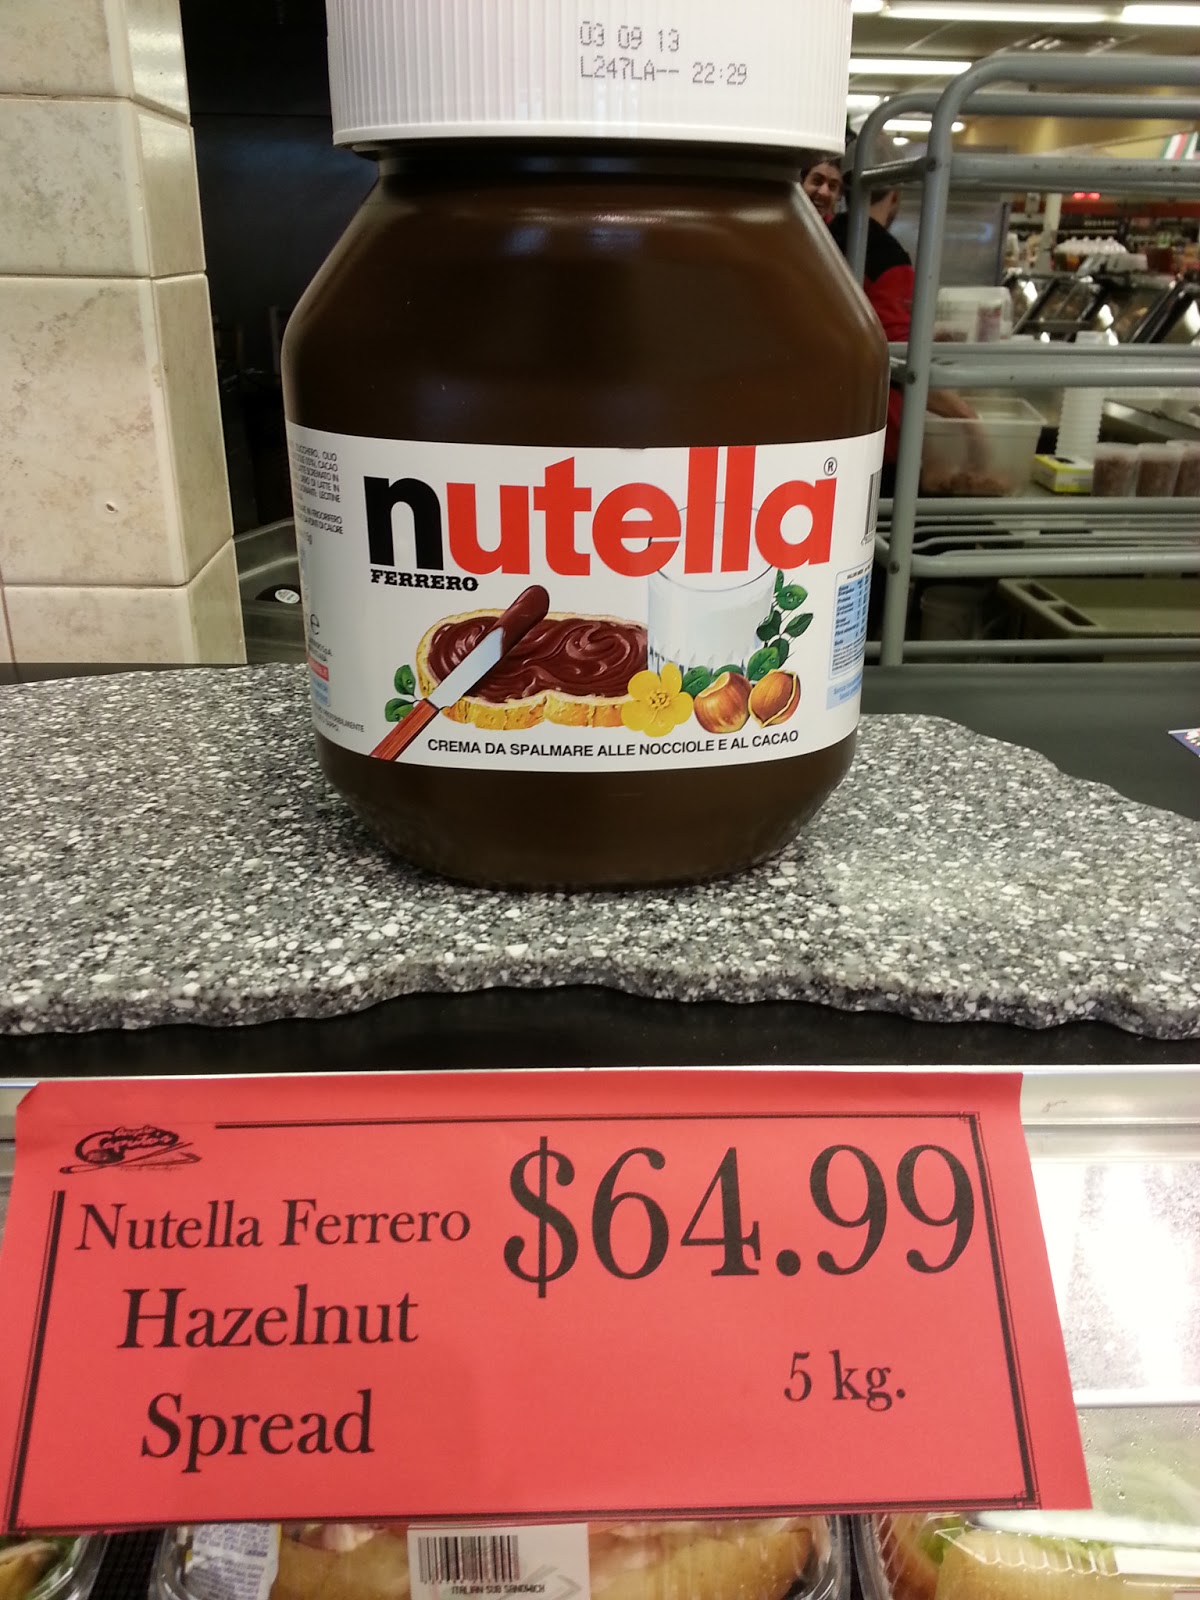 jensblogawog: SIGHTING: 5kg Nutella!